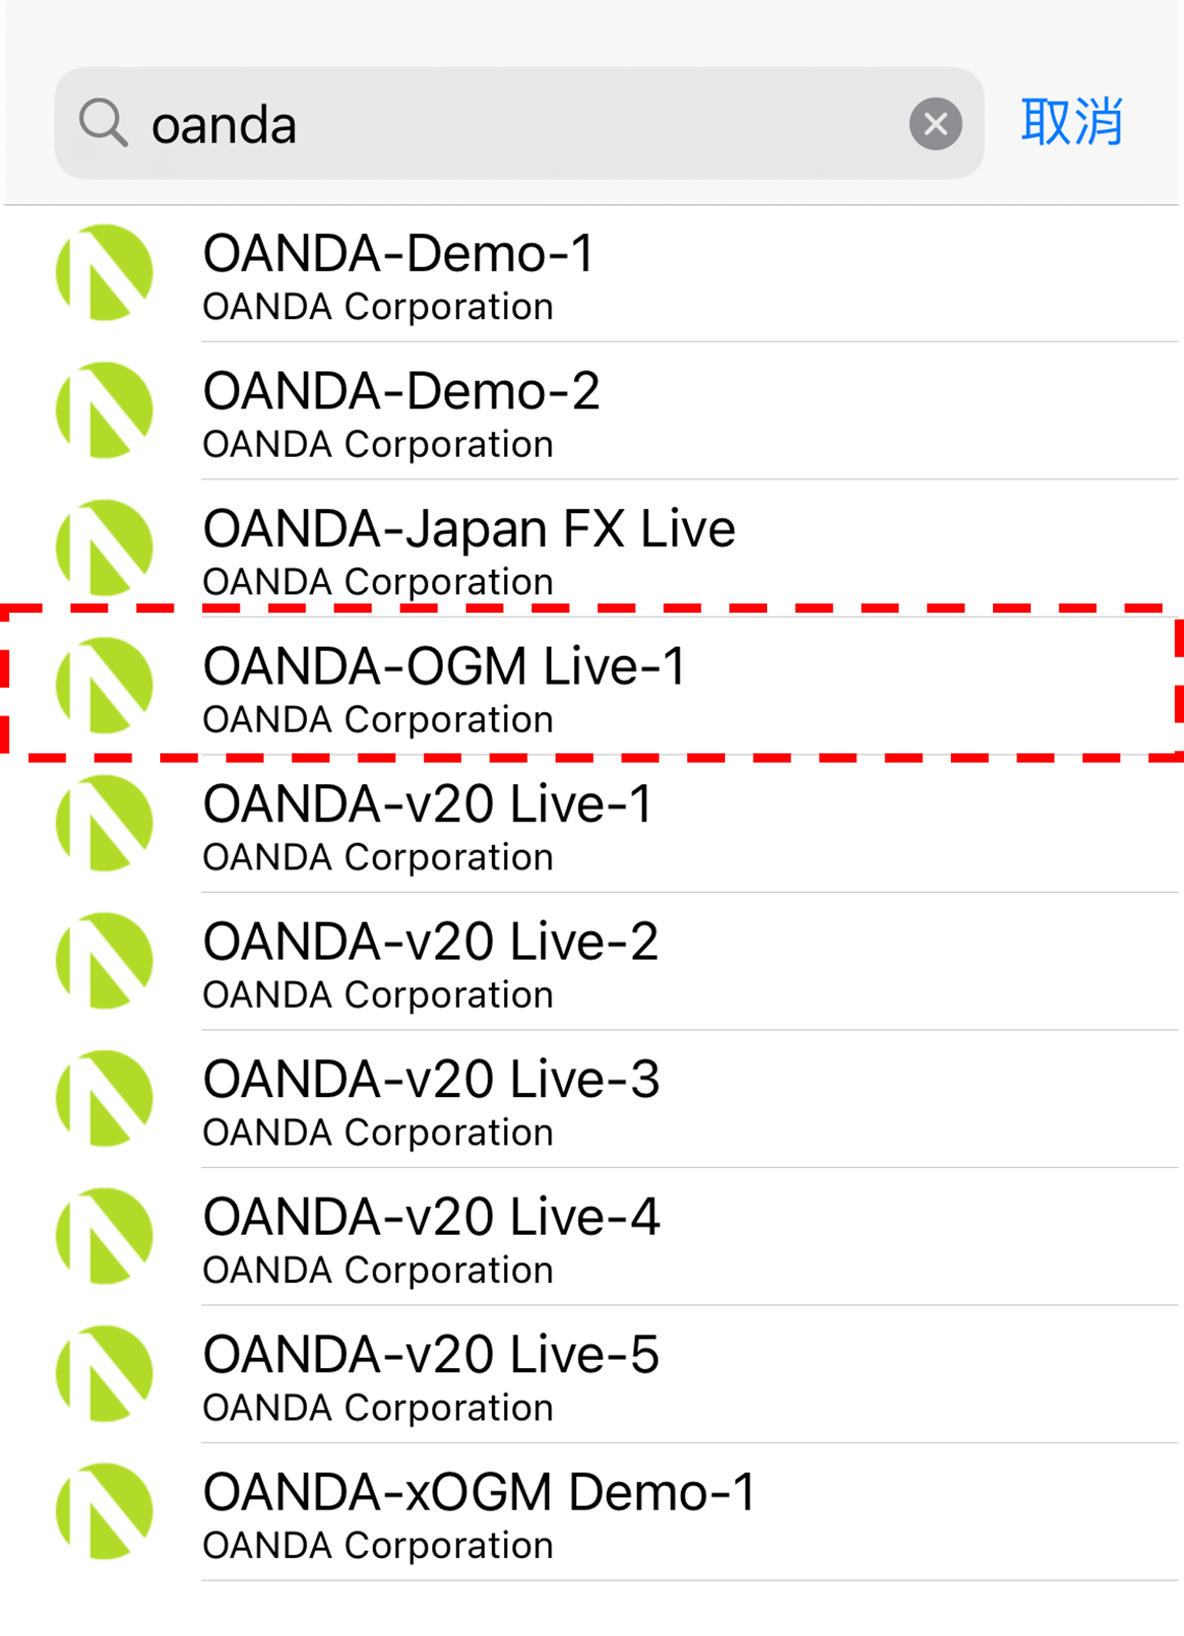 OANDA-OGM Live-1